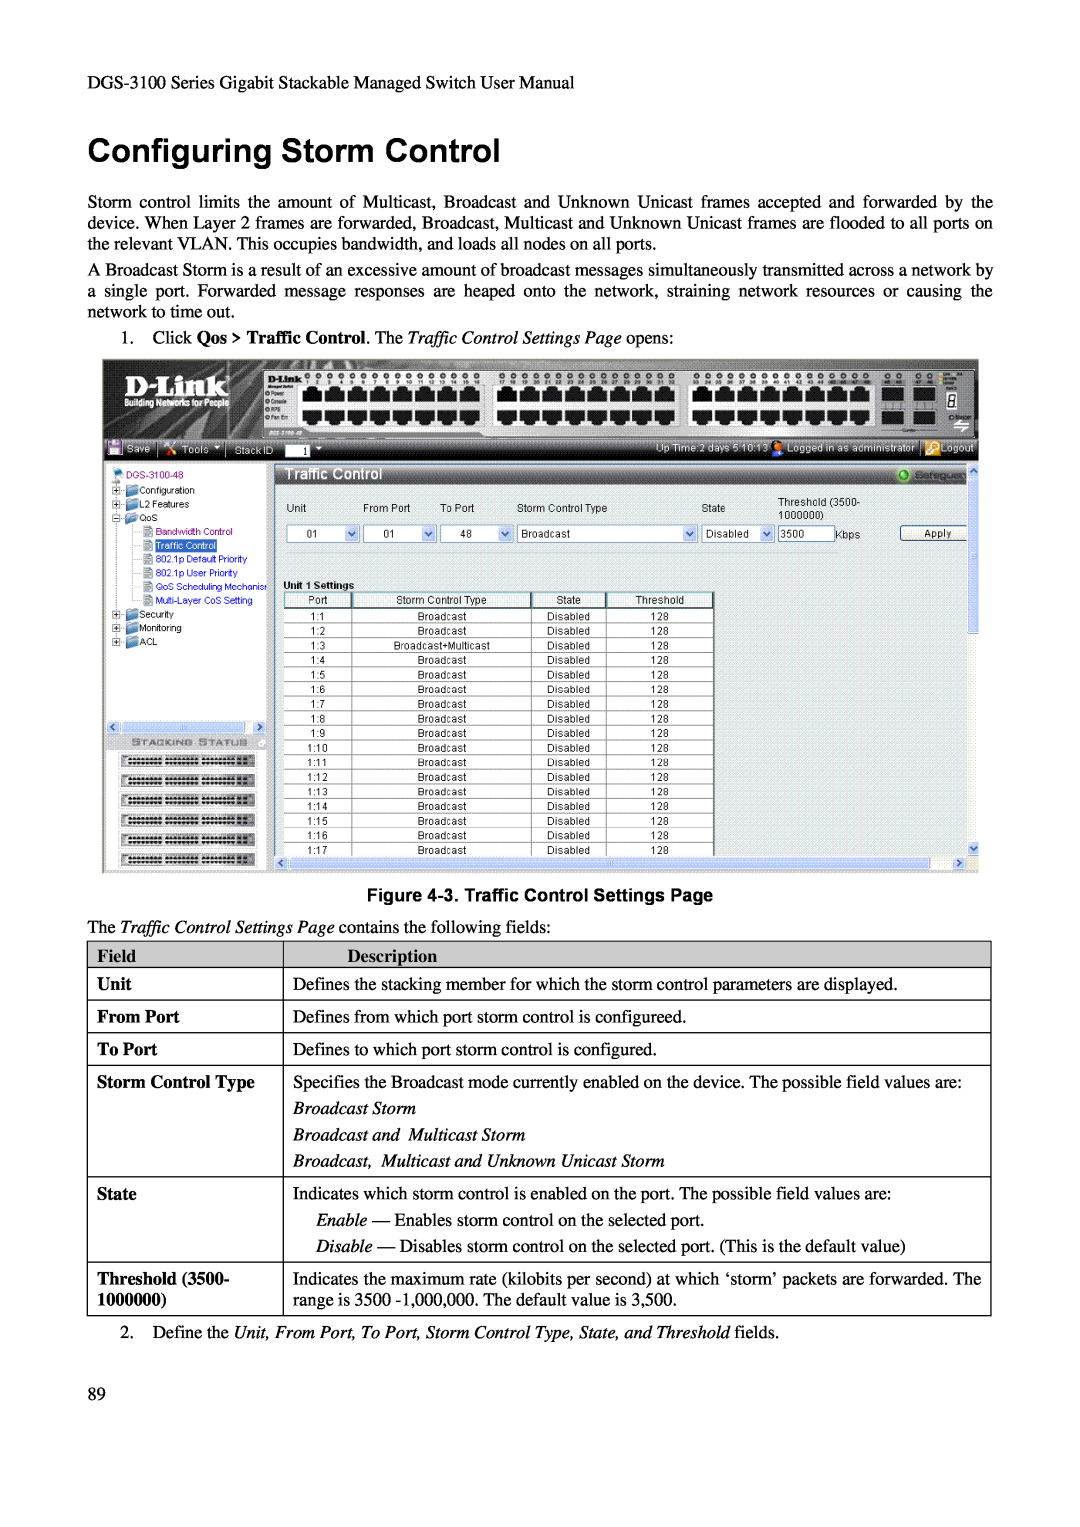 D-Link DGS-3100 user manual Configuring Storm Control, 3. Traffic Control Settings Page, Description 